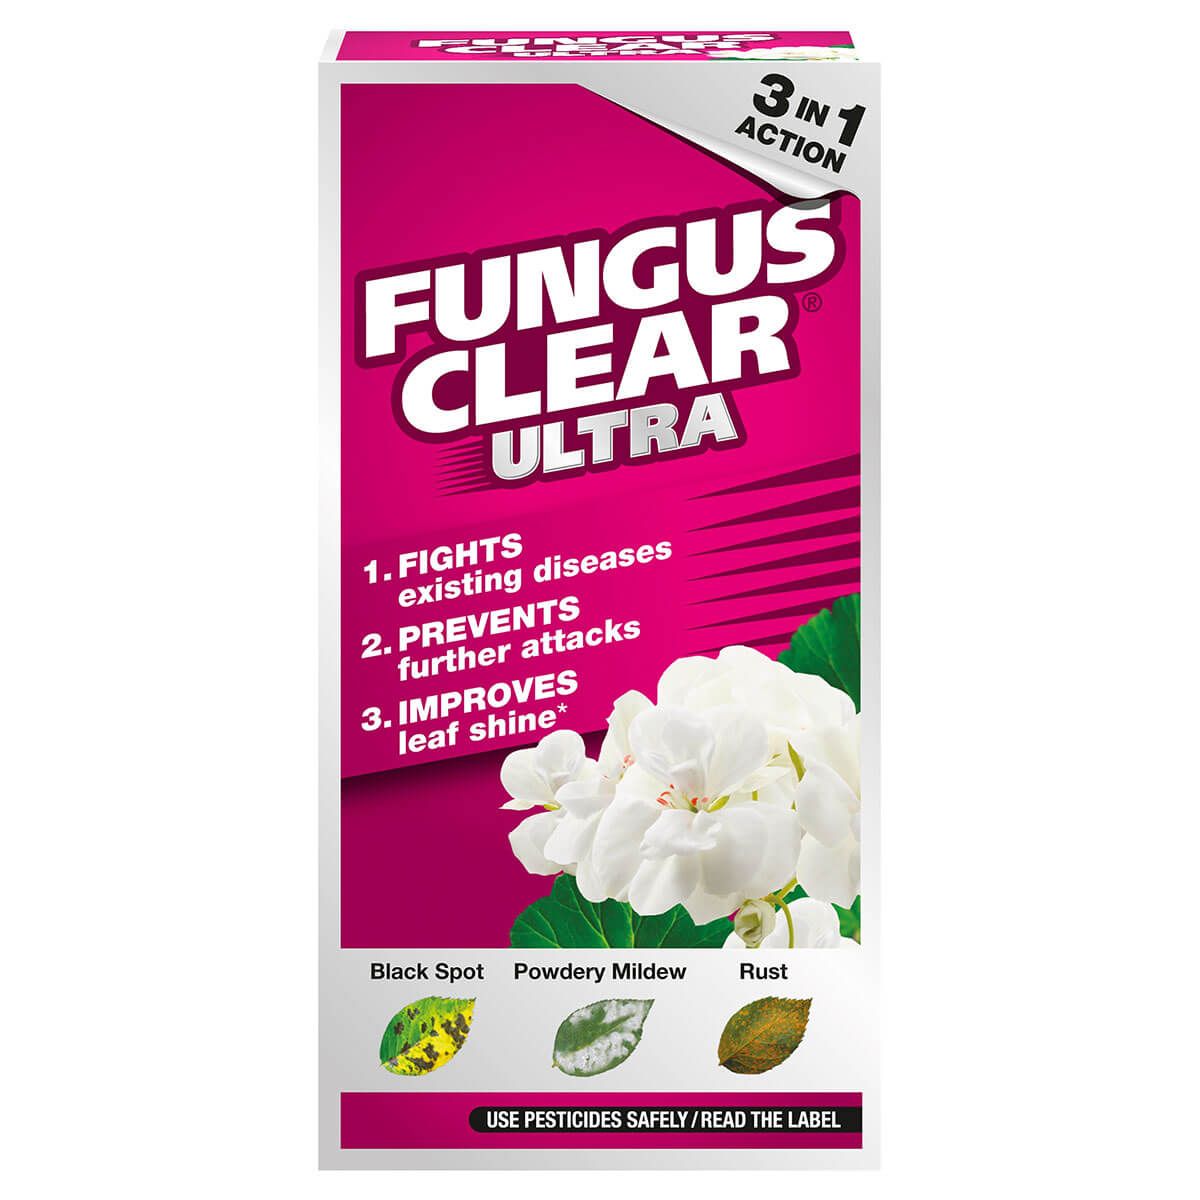 3 in 1 FungusClear Ultra (225ml)